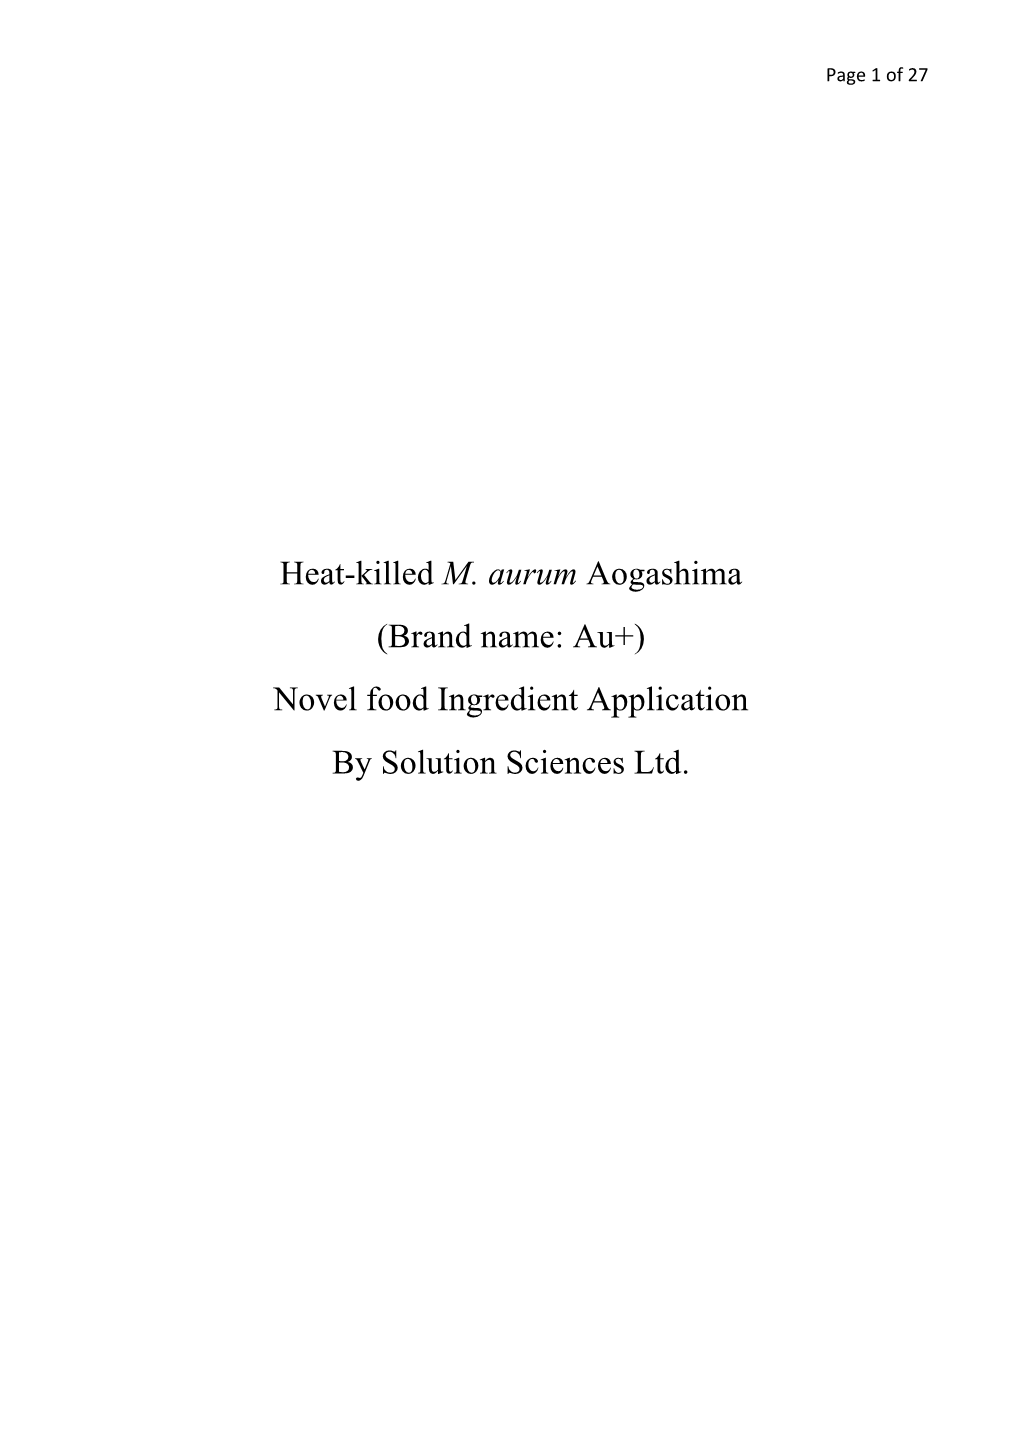 Heat-Killed M. Aurum Aogashima (Brand Name: Au+) Novel Food Ingredient Application